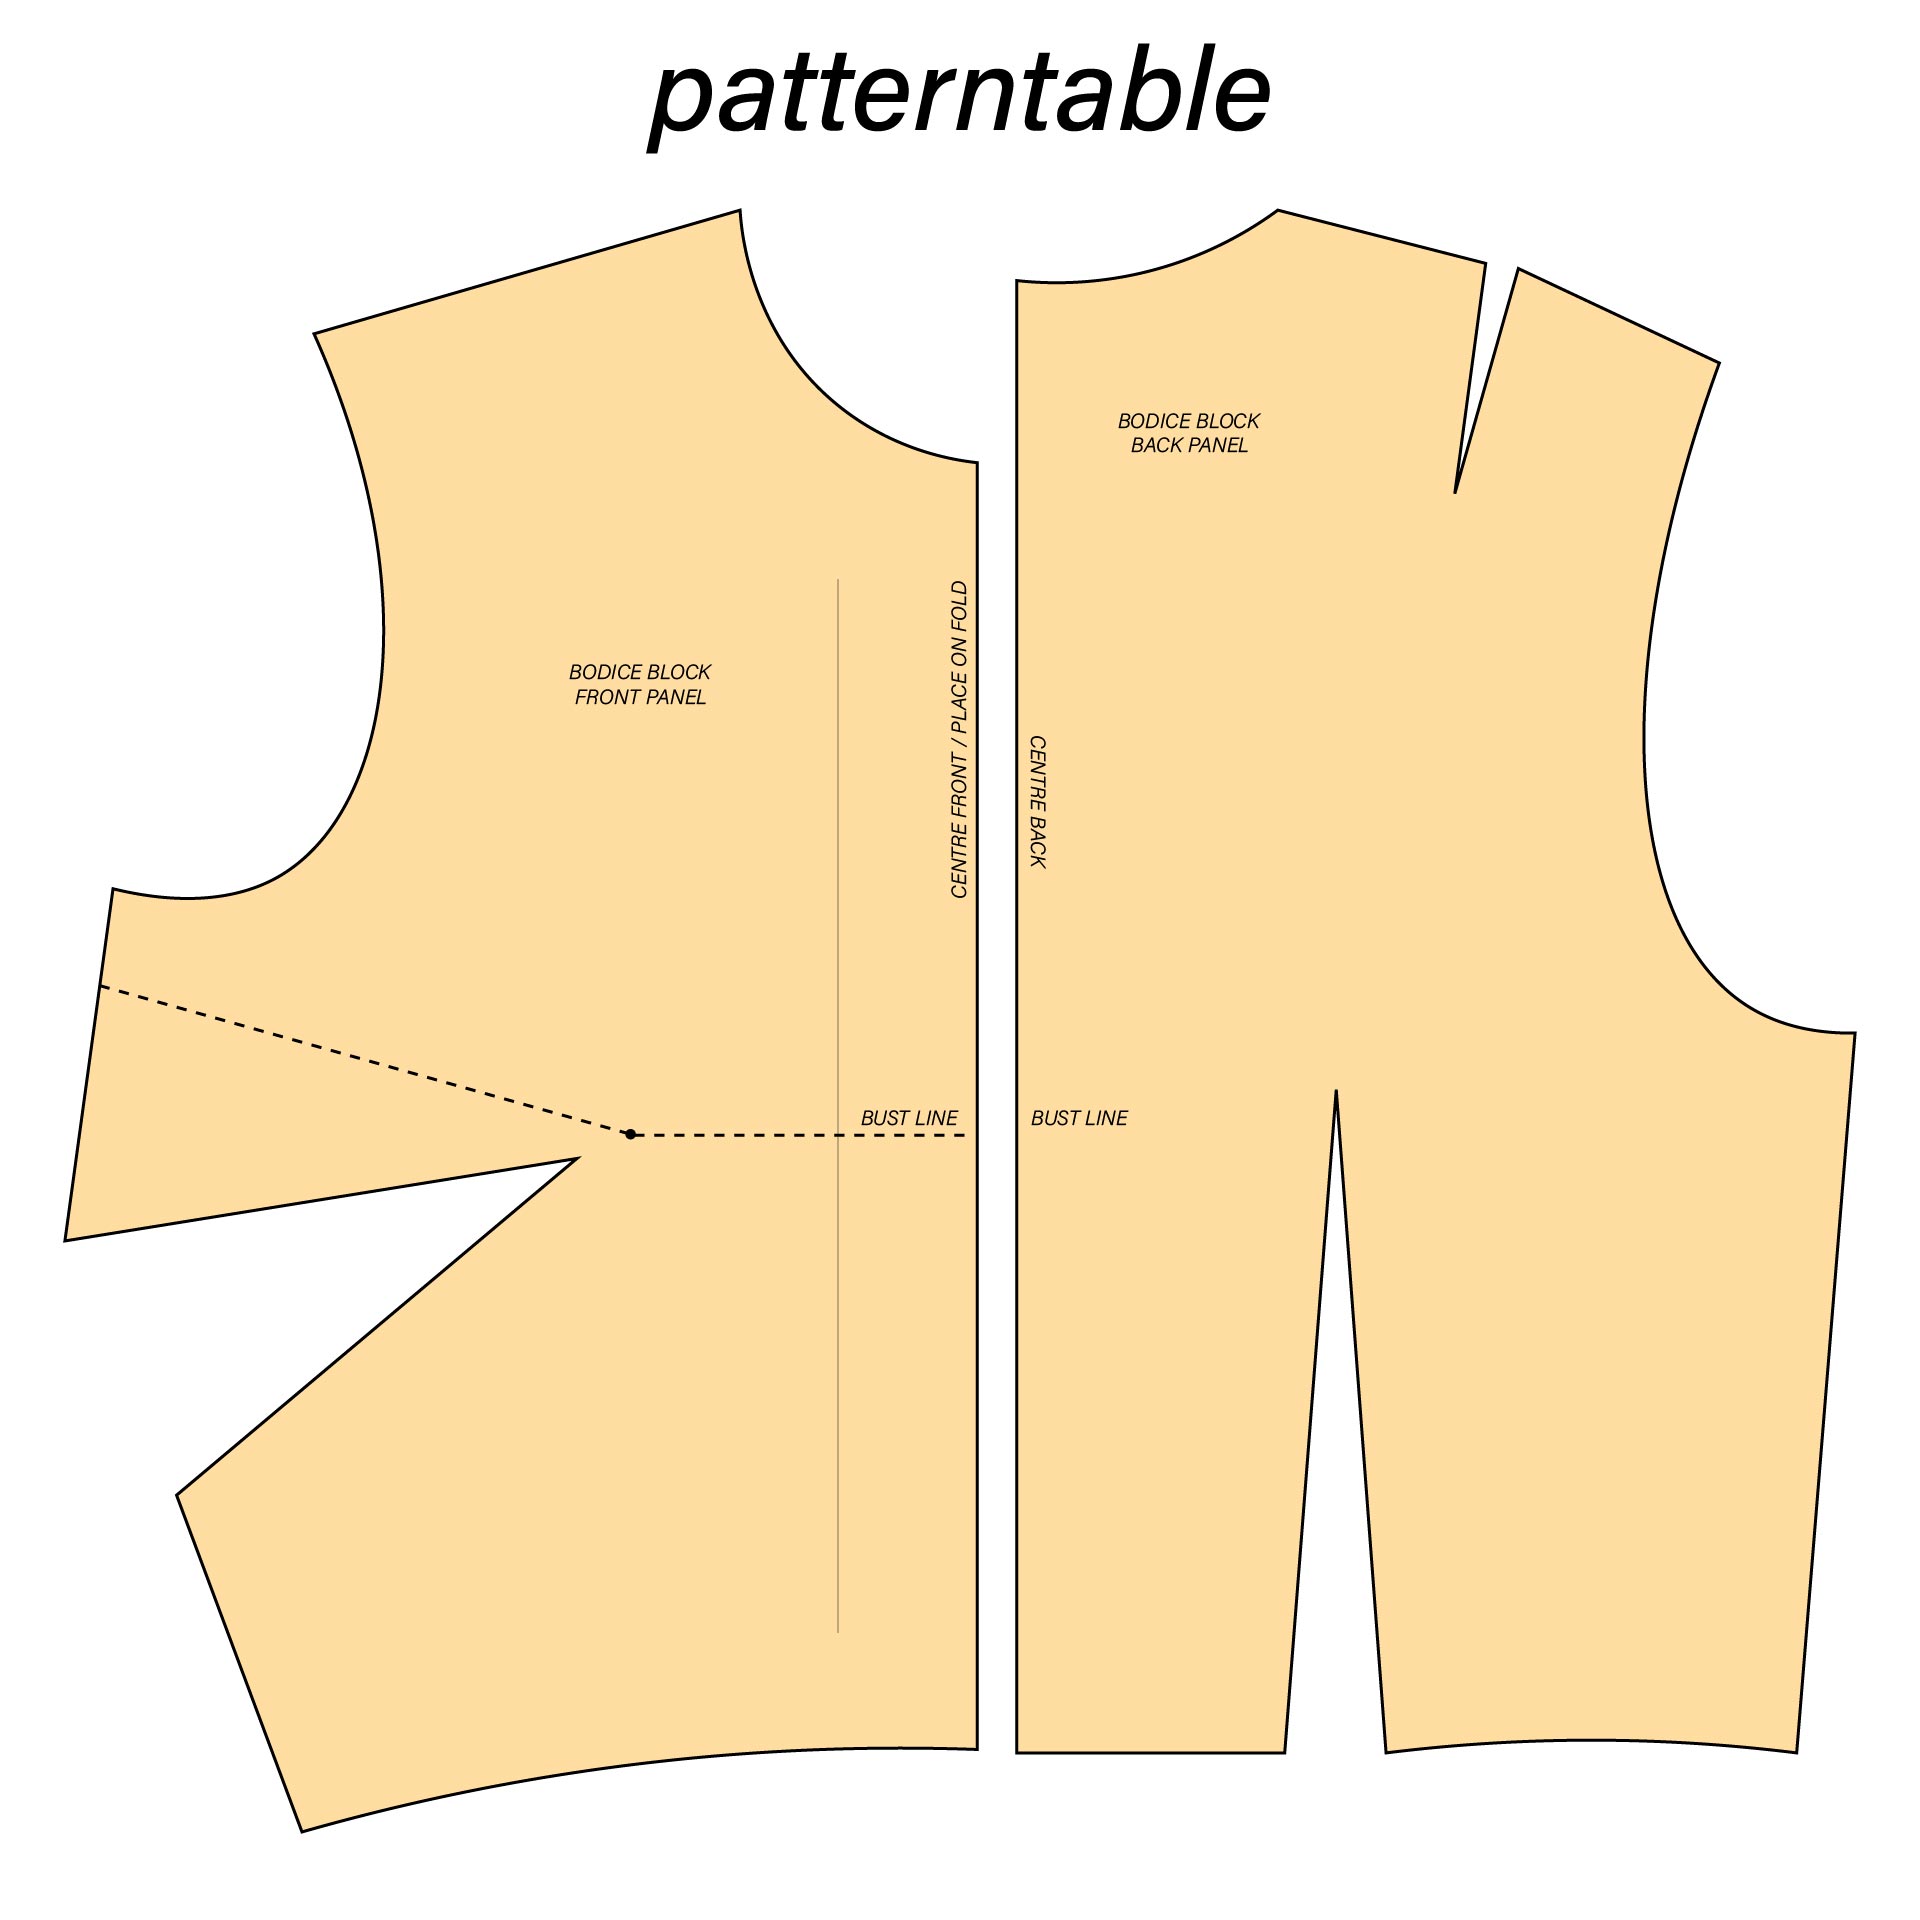 Printable Sewing Patterns